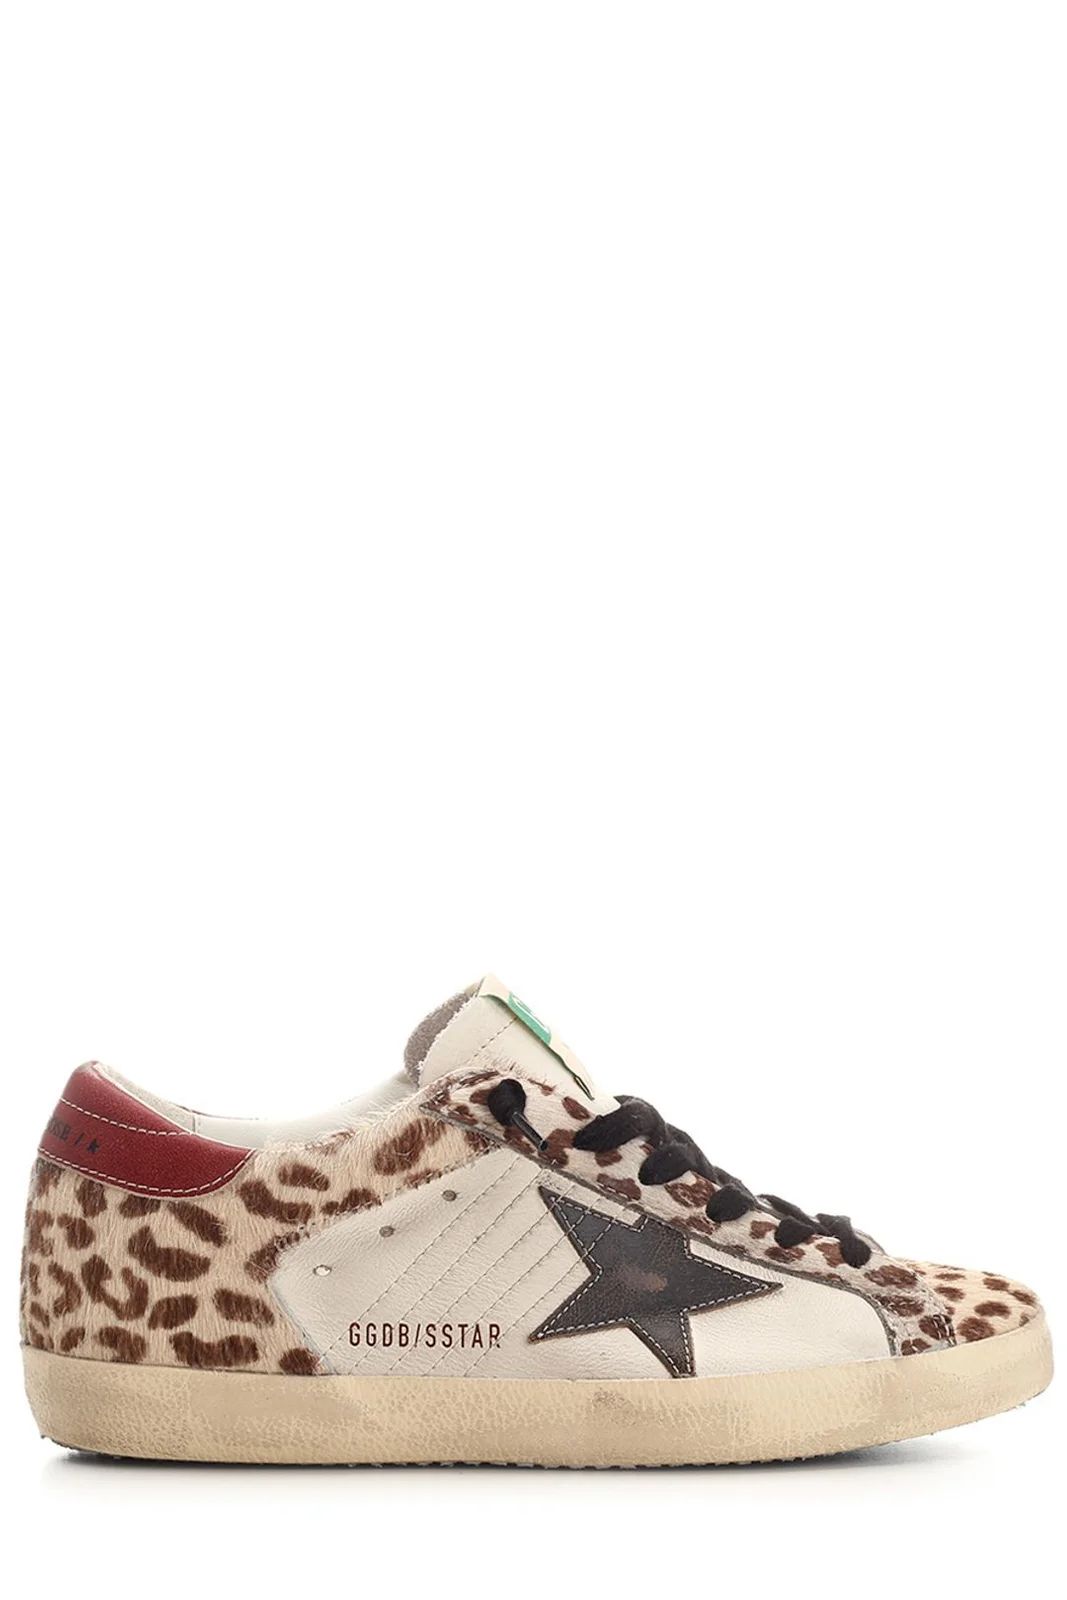 Golden Goose Deluxe Brand Leopard Printed Low-Top Sneakers | Cettire Global